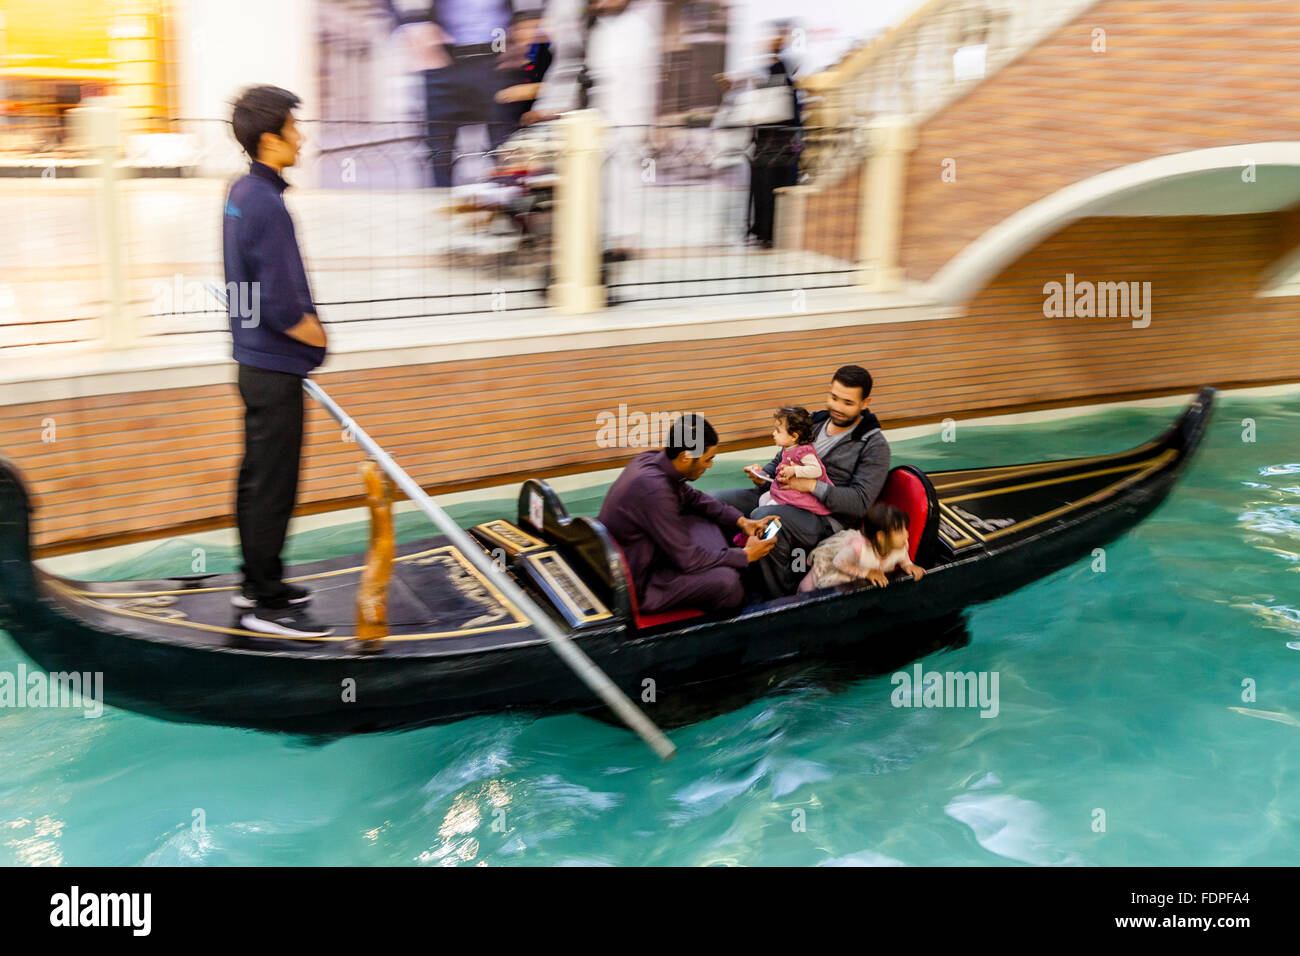 People Taking A Gondola Ride, Villaggio Shopping Mall, Doha, Qatar Stock Photo